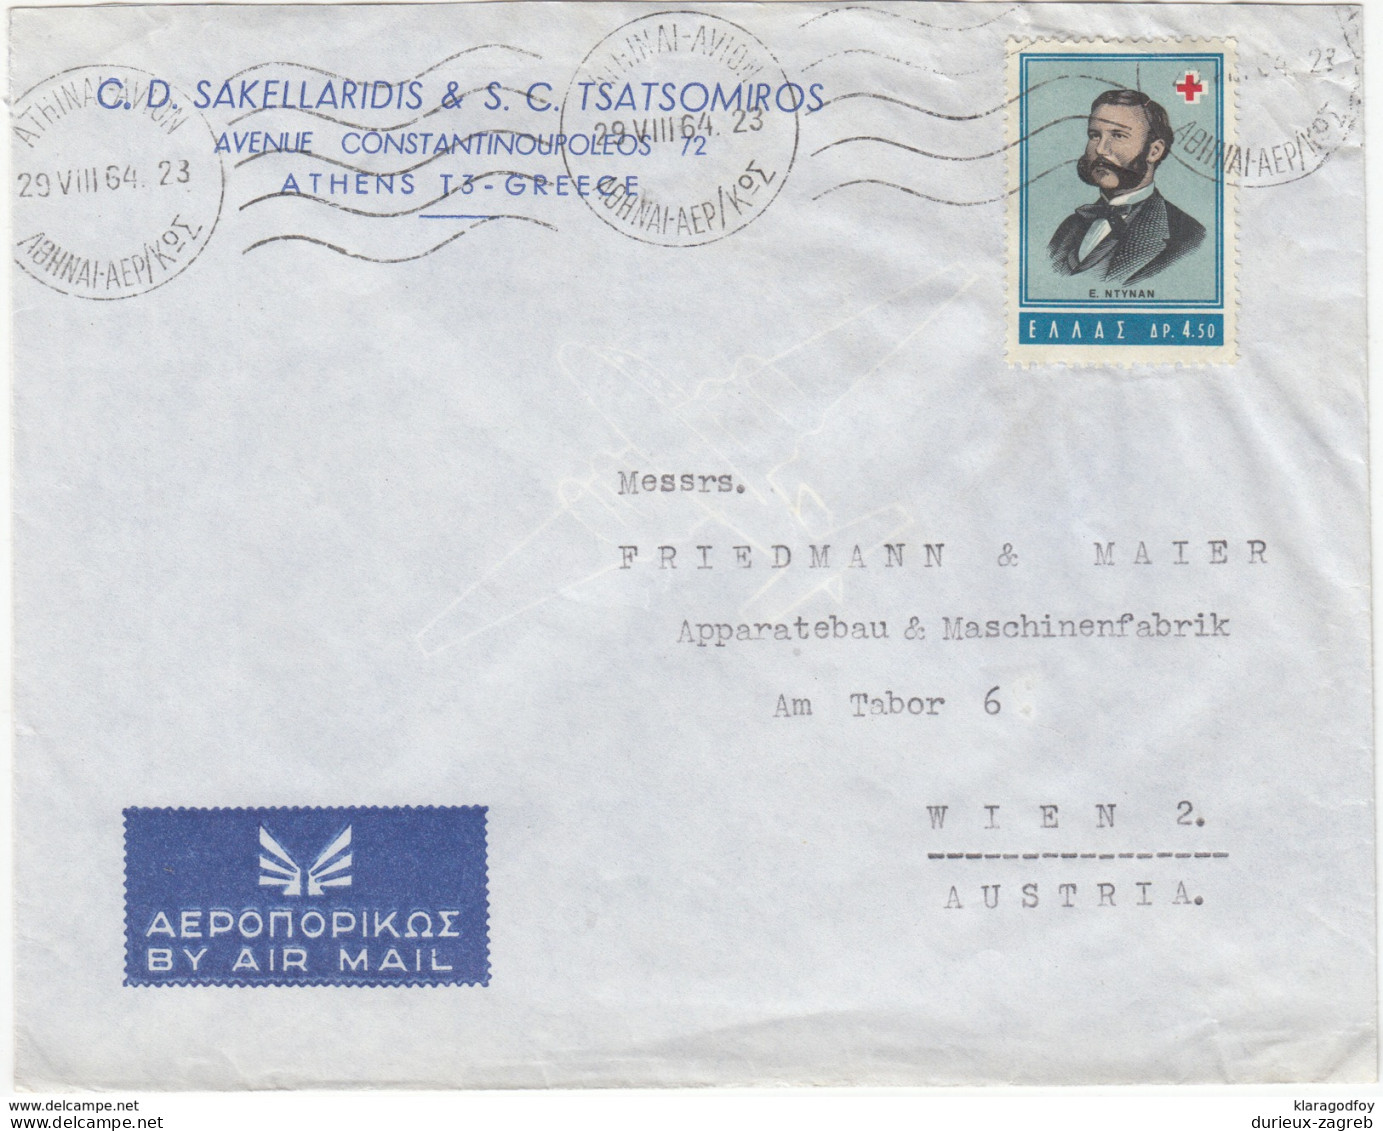 C.D. Sakellaridis & S.C. Tsatsomiros Company Air Mail Letter Cover Travelled 1964 To Austria B171005 - Briefe U. Dokumente